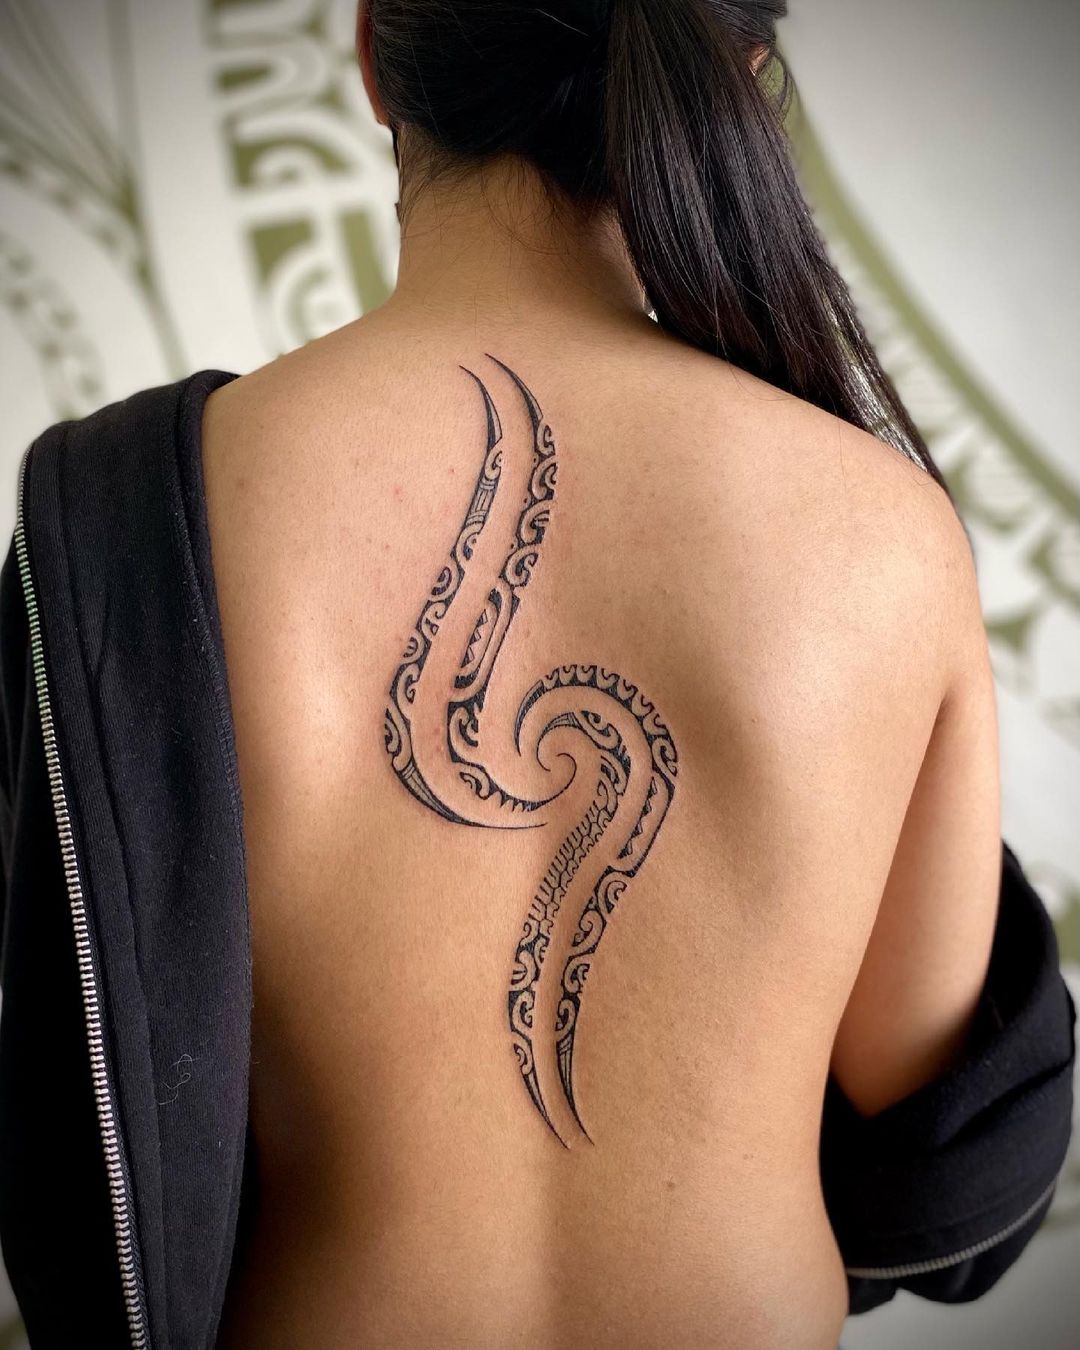 Spine Tattoo Ideas  Designs for Spine Tattoos